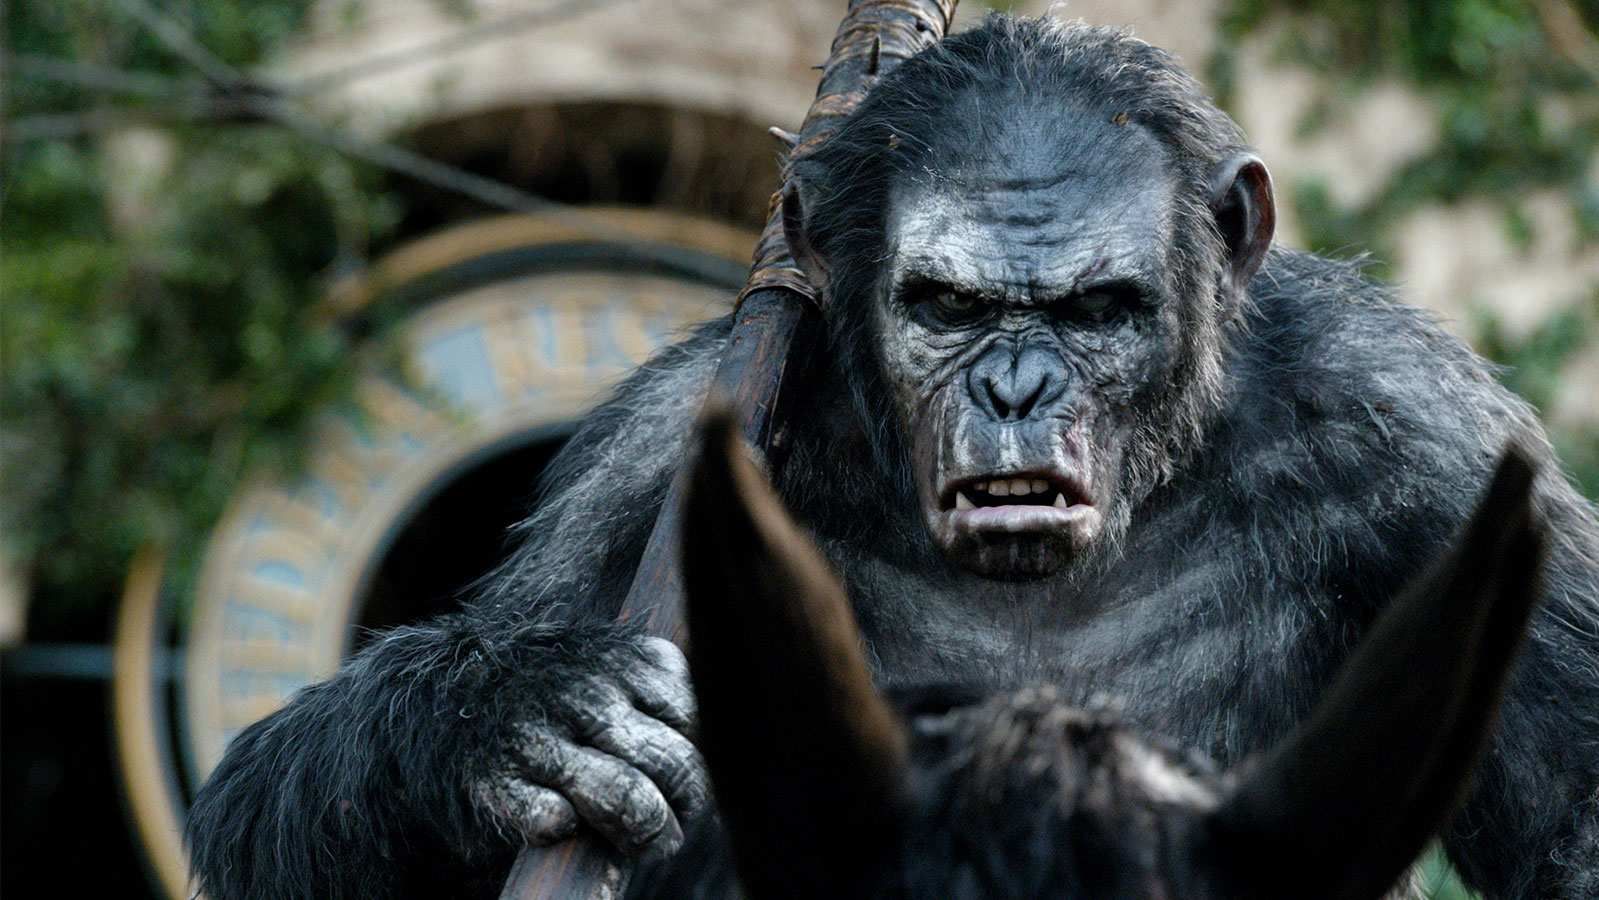 What kind of ape is Koba?